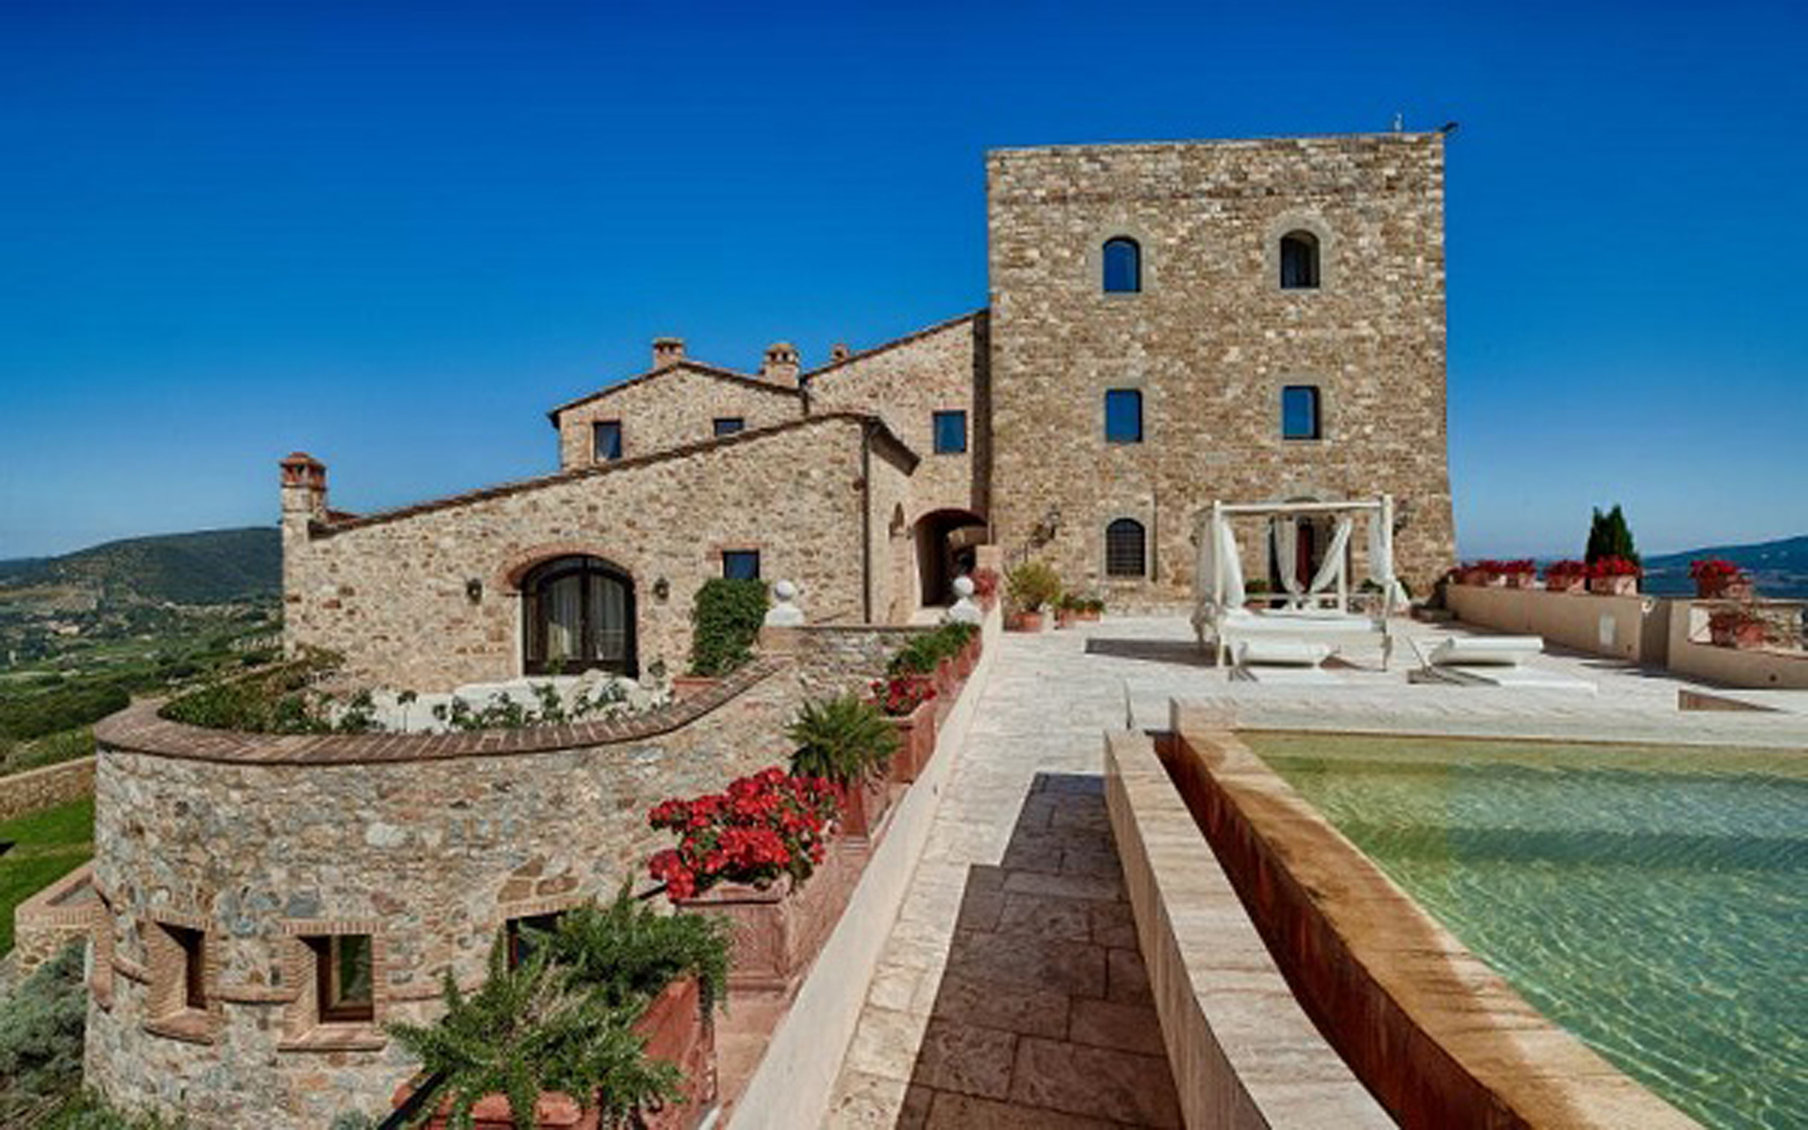 Castello Di Velona Resort, Thermal SPA & Winery - Montalcino - Tuscany image